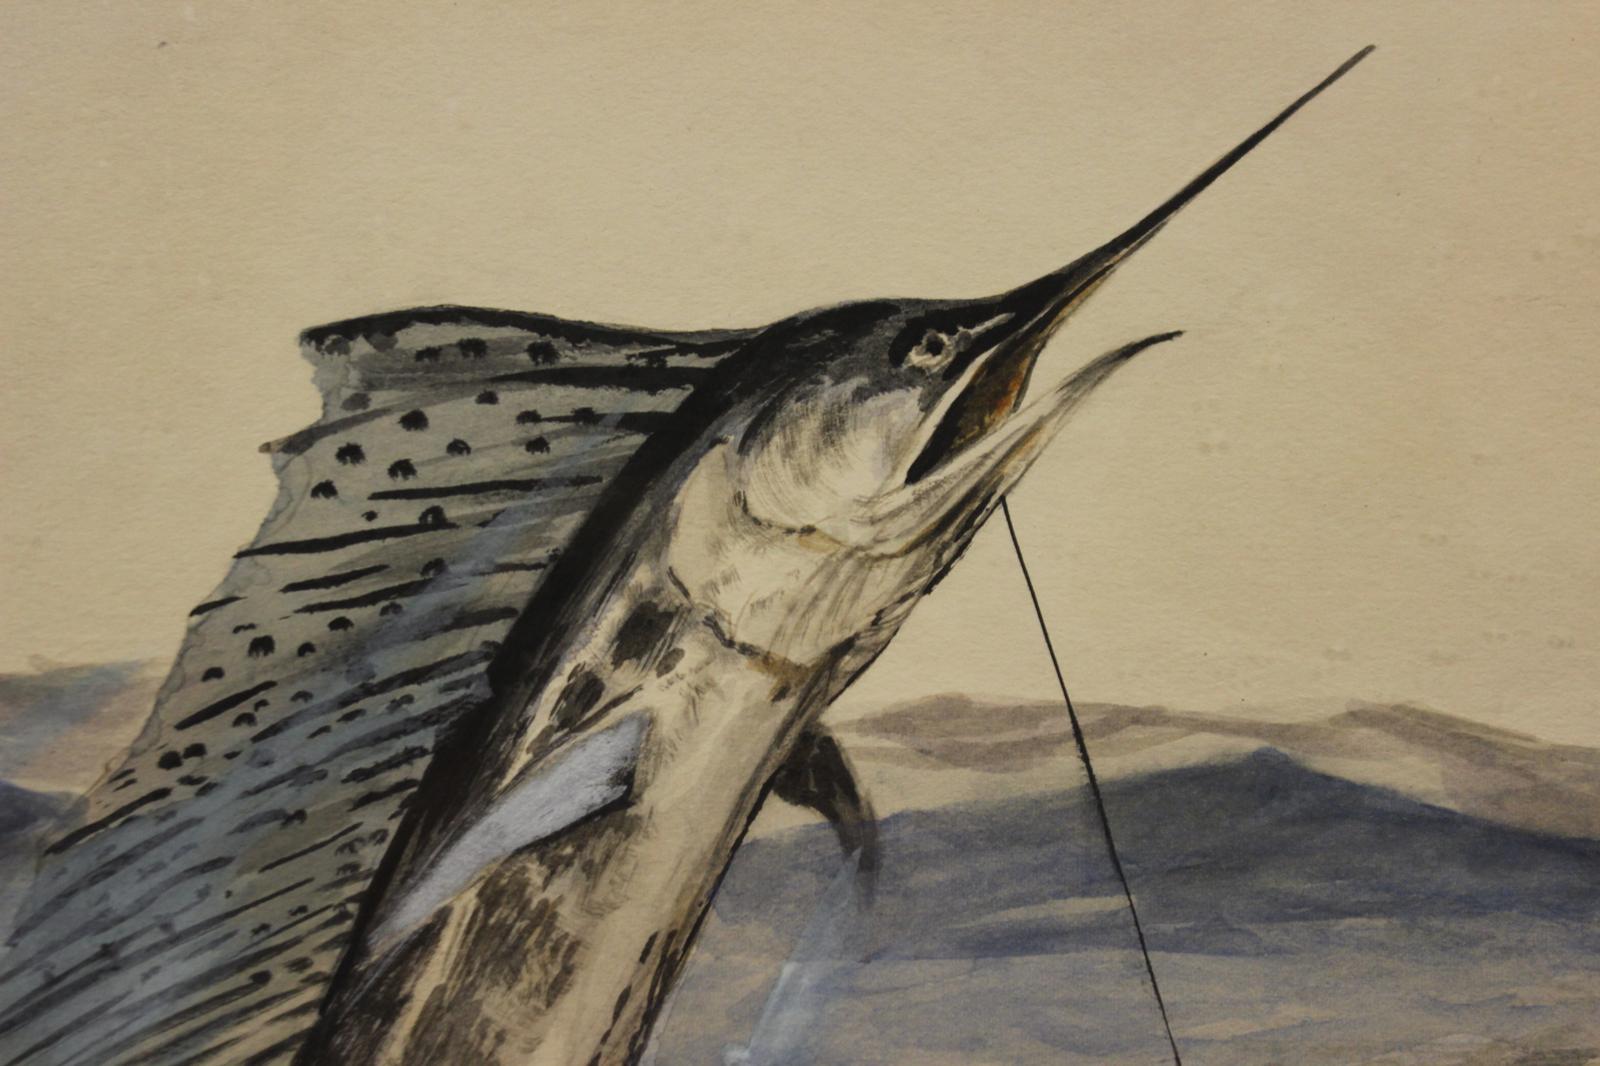 Classic watercolour depicting a leaping swordfish taking the bait

Art Sz: 13 1/2